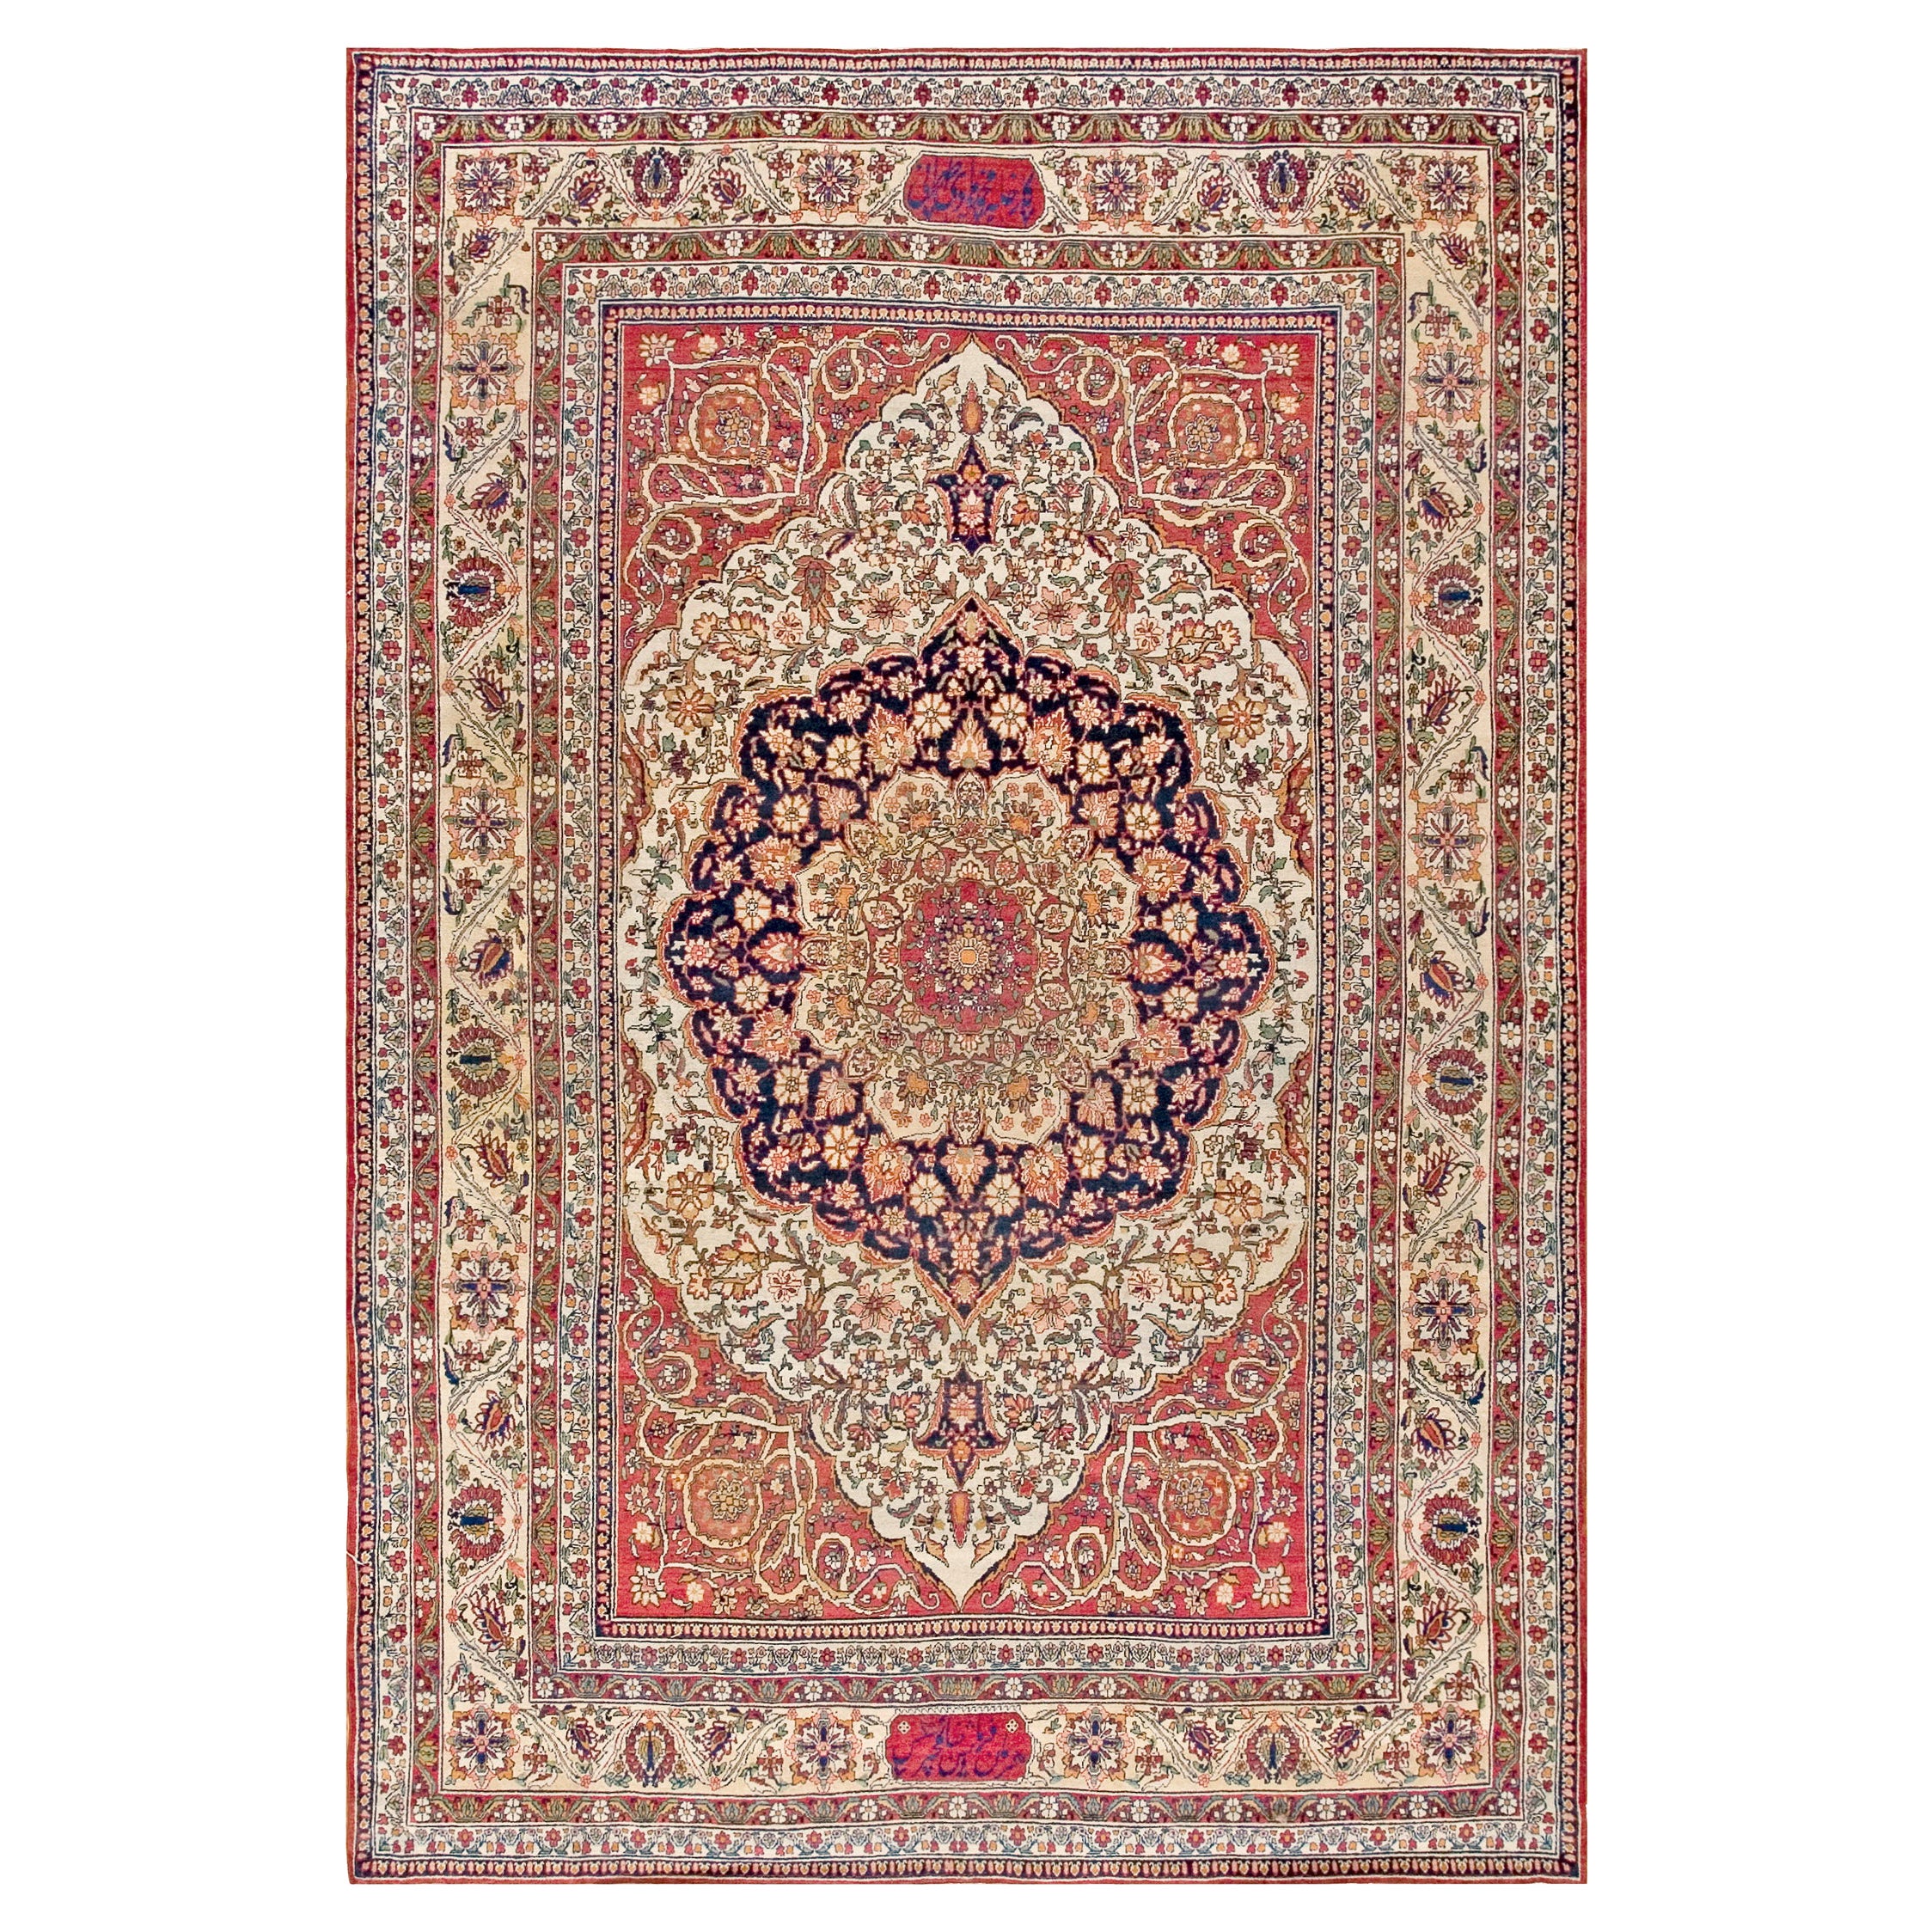 19th Century Persian Kerman Laver Carpet (7'9" x 11'9" - 236 x 358 cm ) For Sale